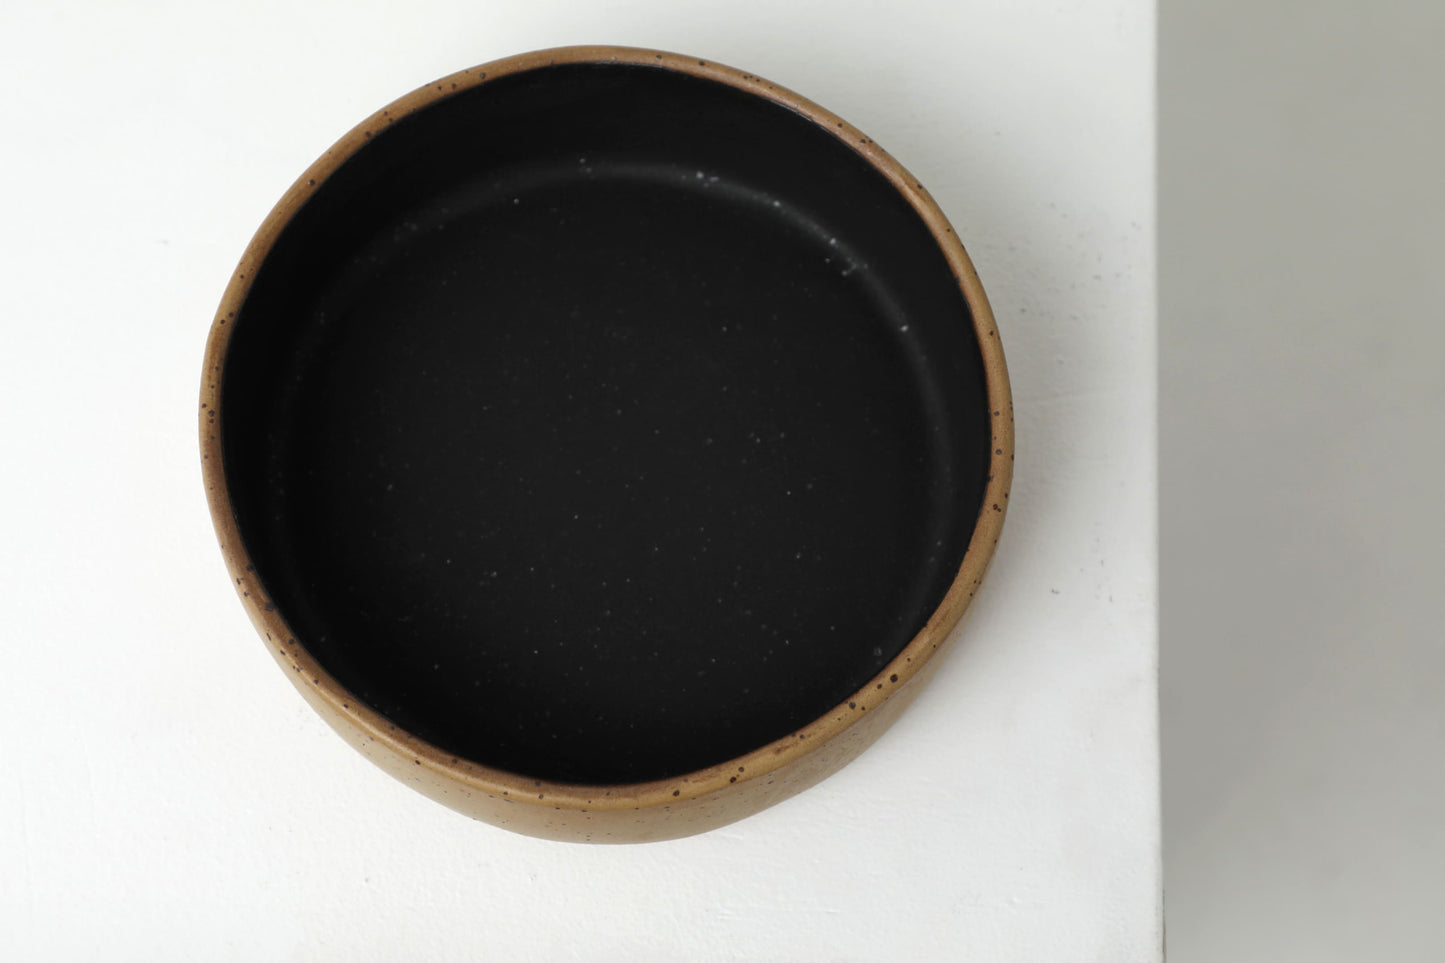 Handmade ceramic dog bowls | RAW+BLACK - premium dog goods handmade in Europe by My Wild Other